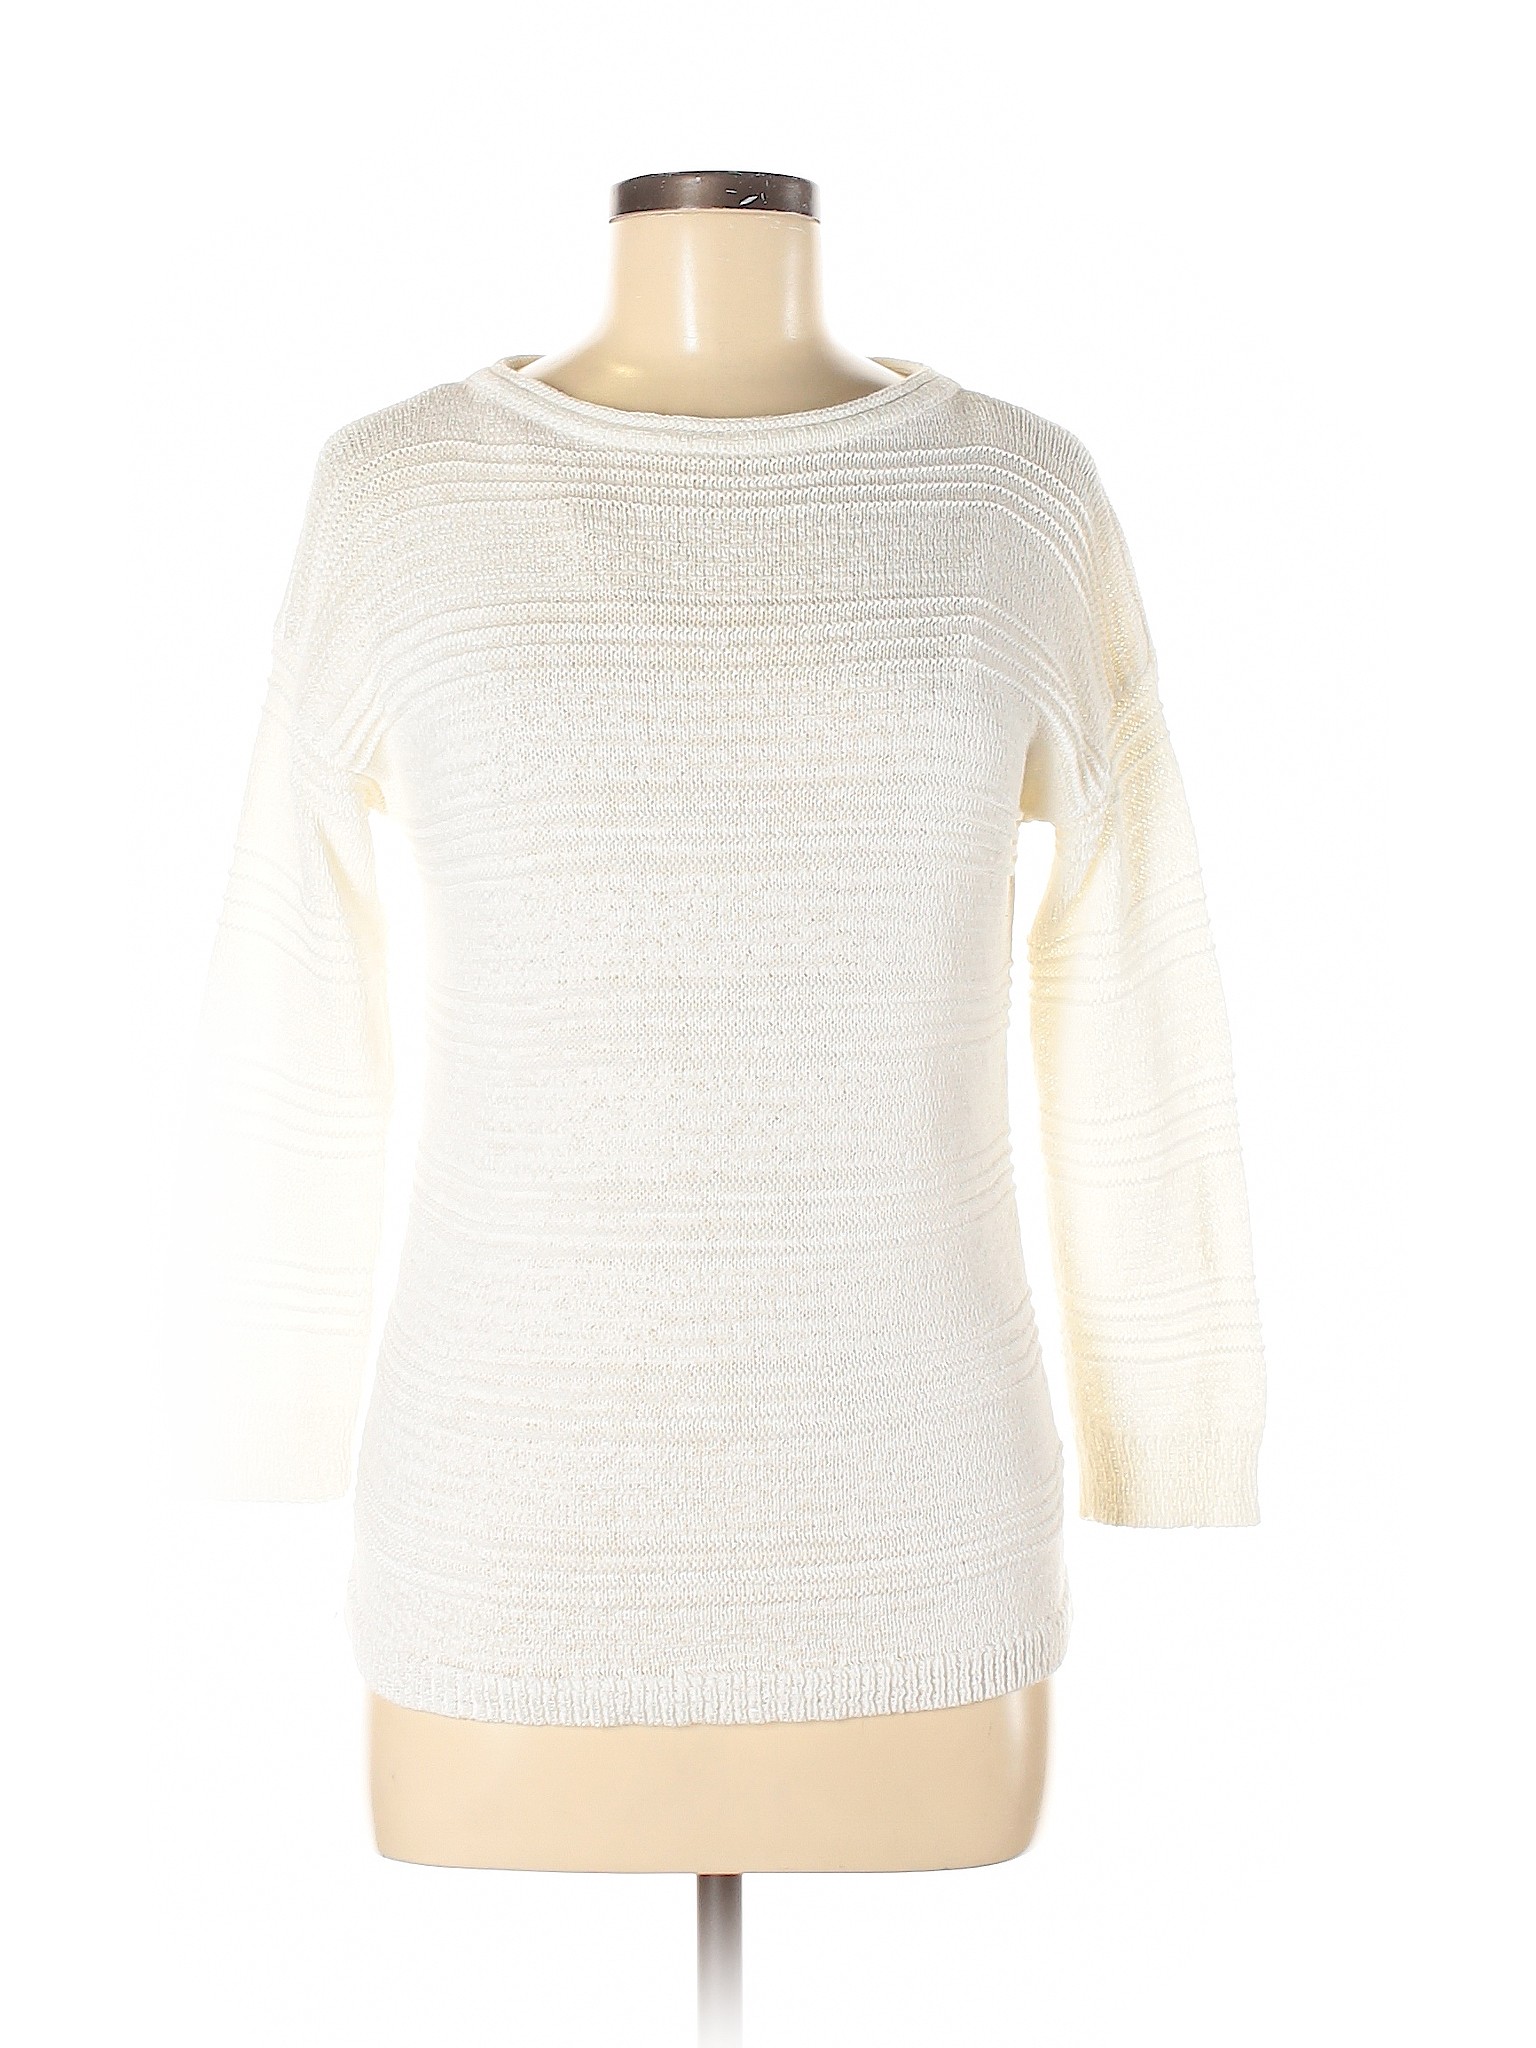 American Living Women White Pullover Sweater M | eBay